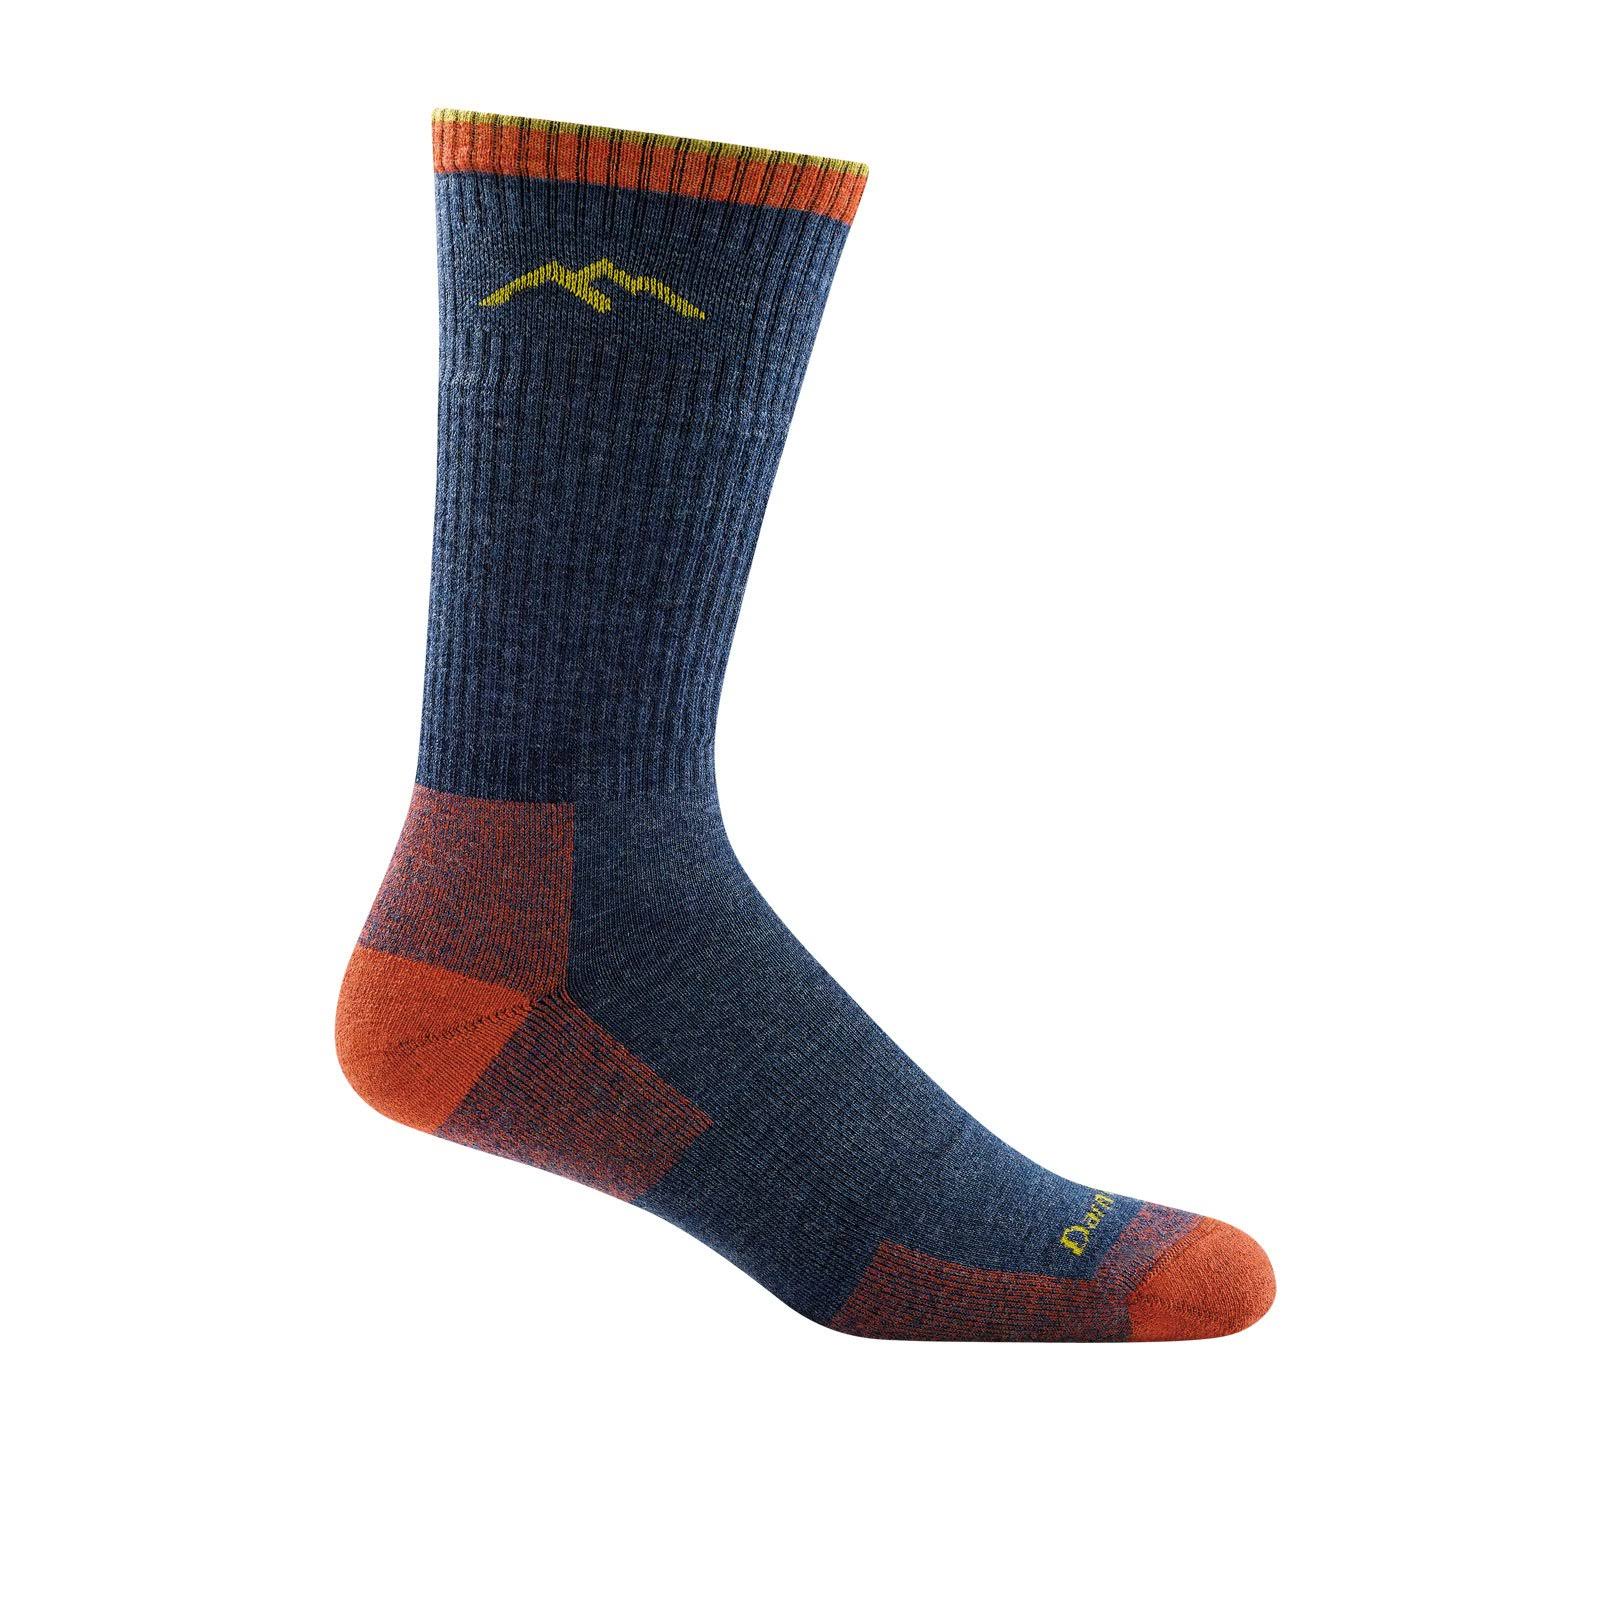 Darn Tough Men's Hiker Boot Cushion Sock - Medium - Denim